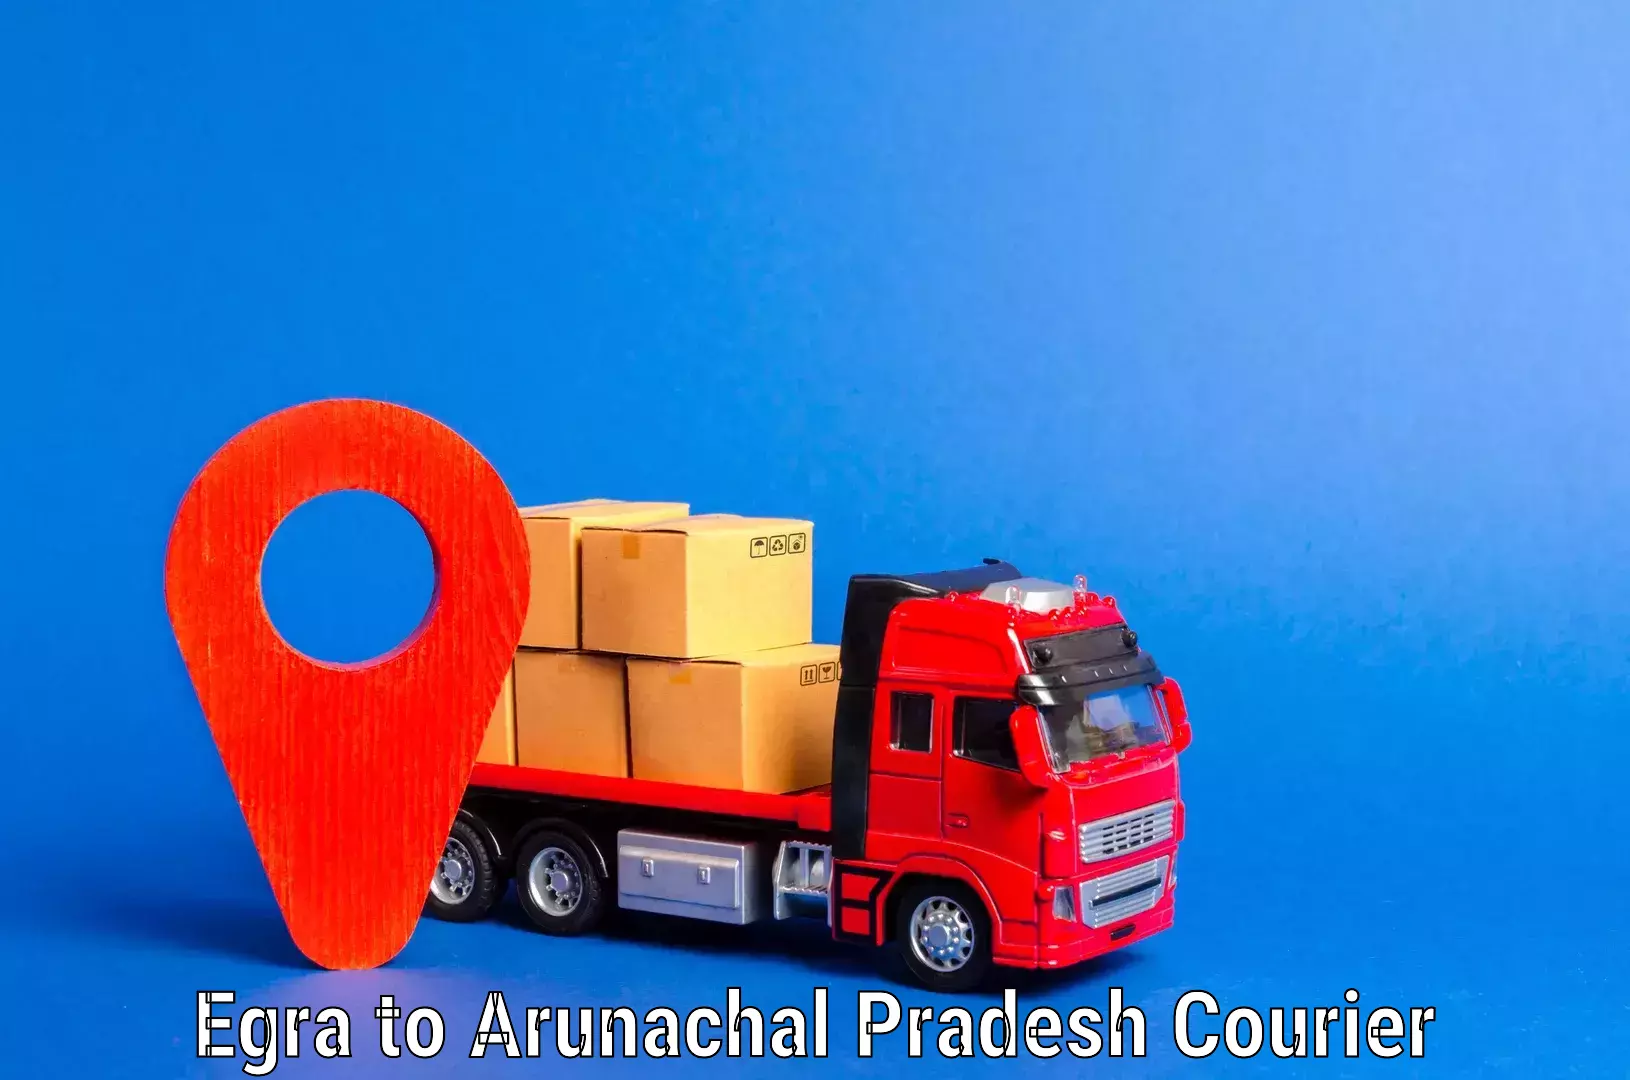 Quality moving company in Egra to Arunachal Pradesh